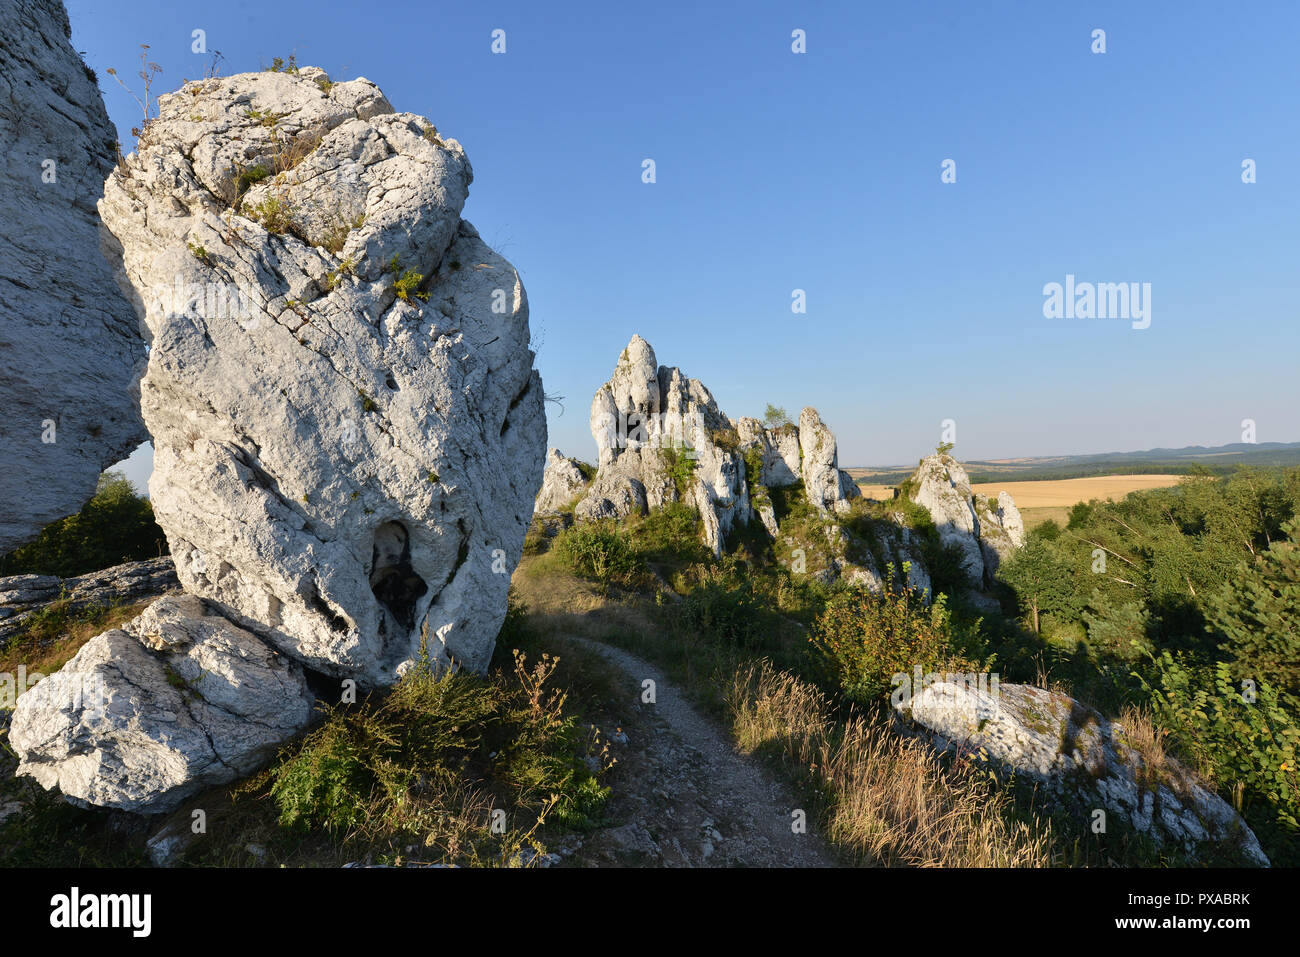 Limestone rocks in ' Jura Krakopwsko - Czestochowska ' in Poland Stock Photo